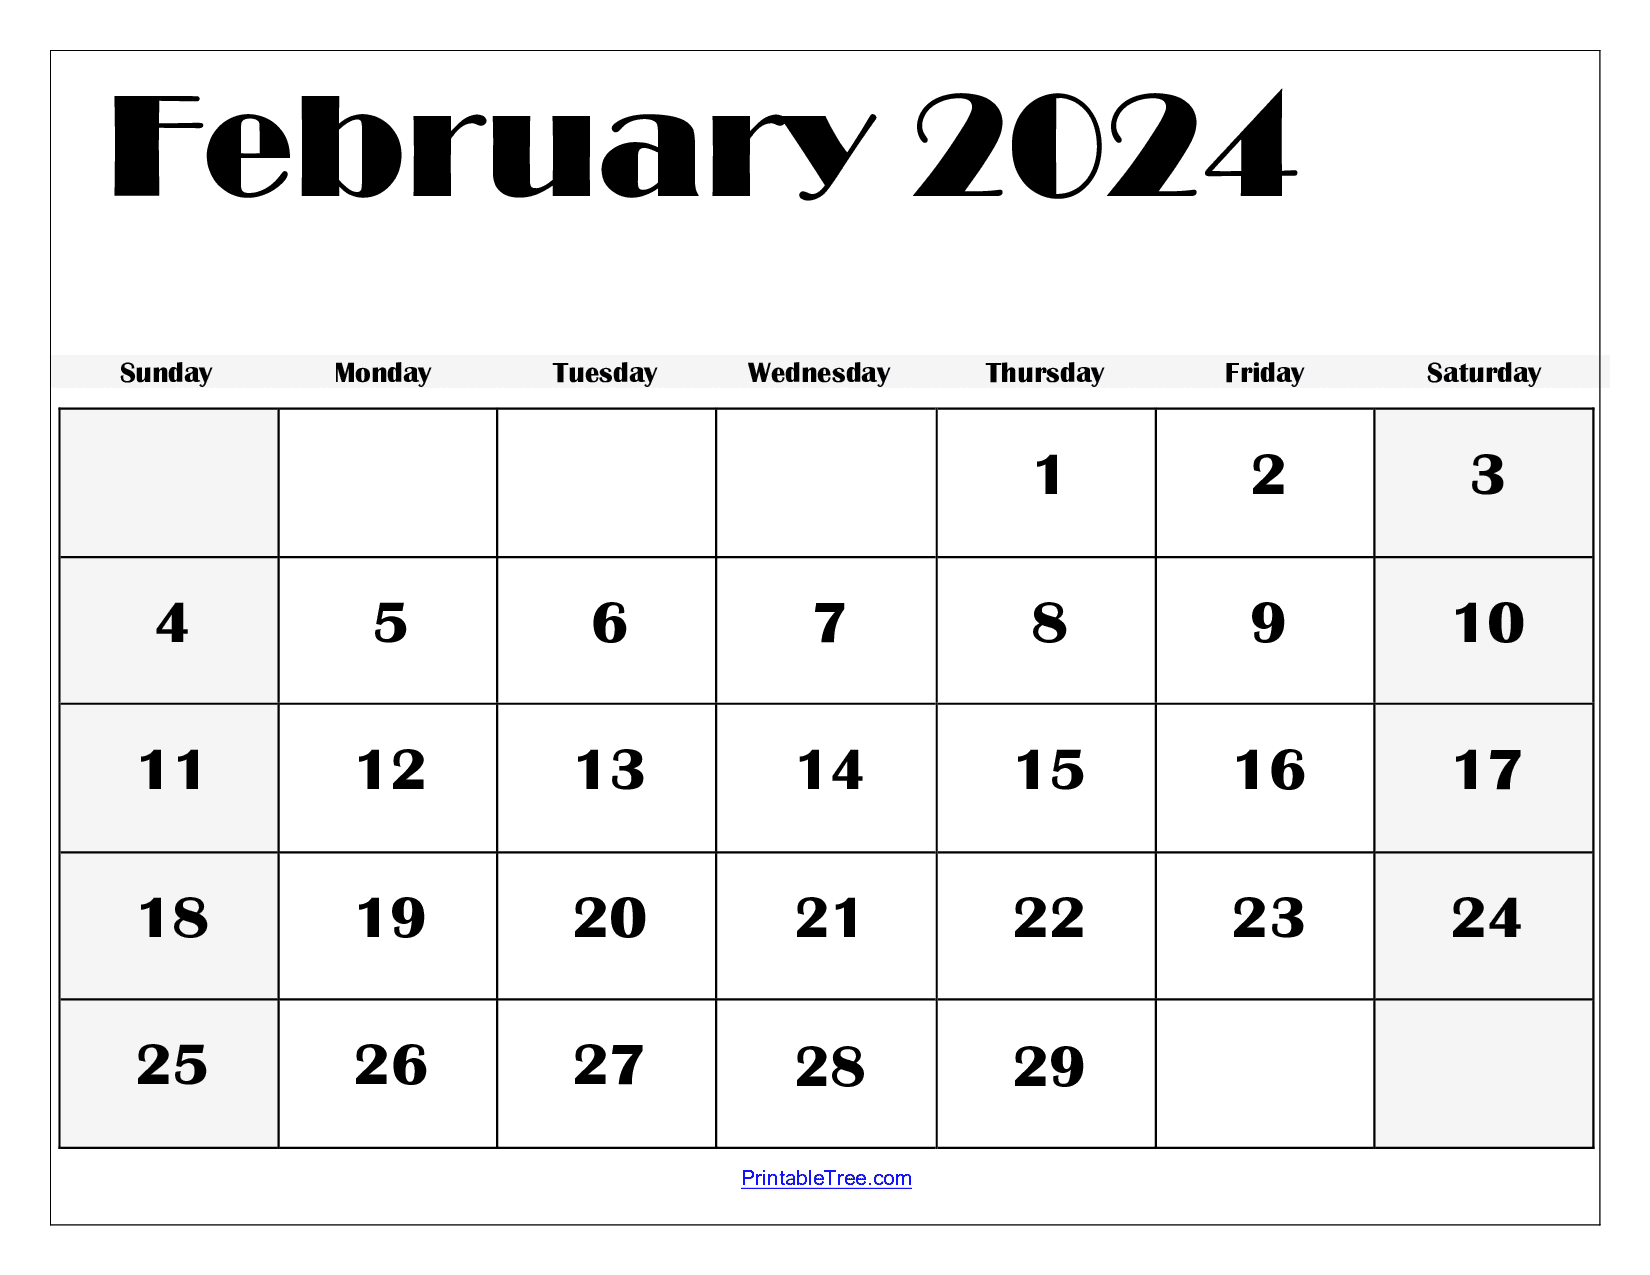 February 2024 Calendar Printable Pdf Template With Holidays for Calendar 2024 February Printable Free